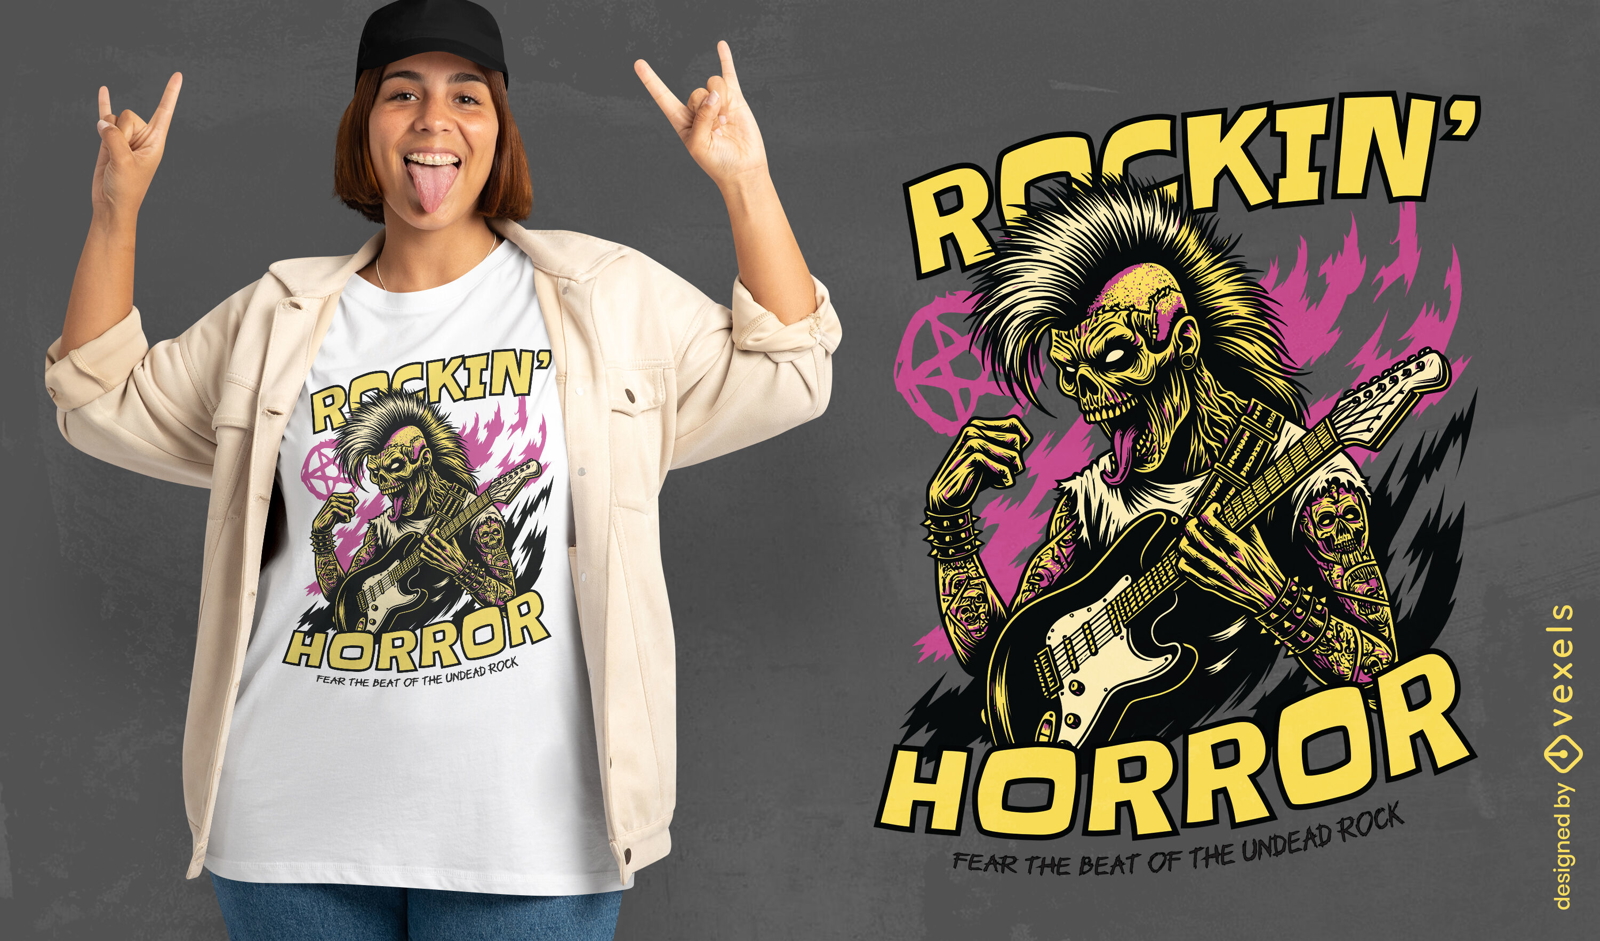 Rockin' horror t-shirt design